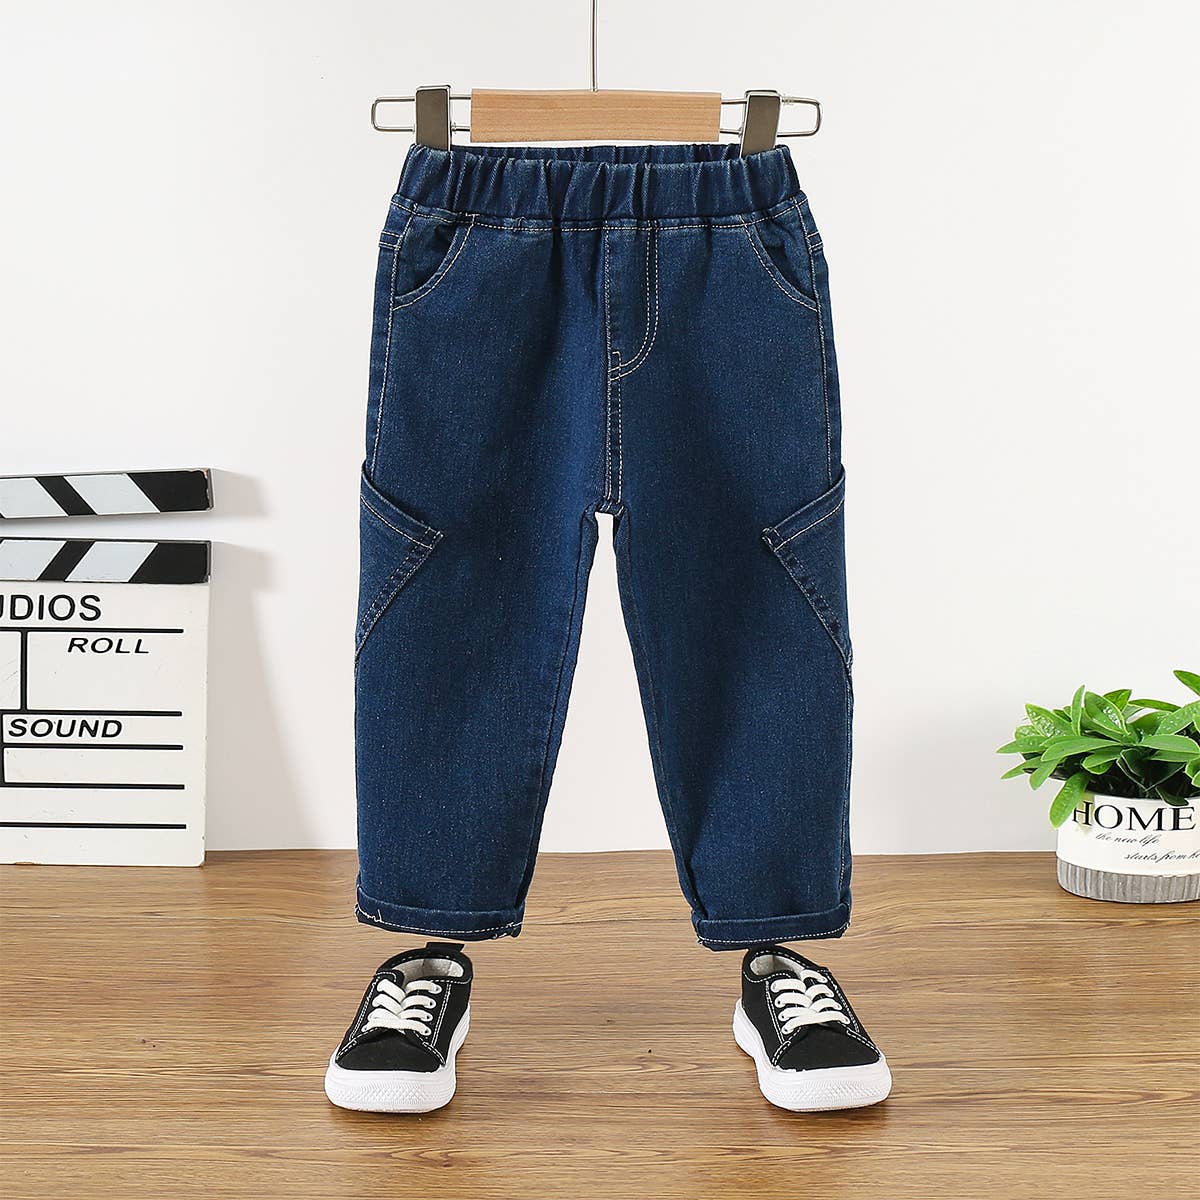 Slant Pockets Pants in Blue Denim- Boys (2T-5/6T)